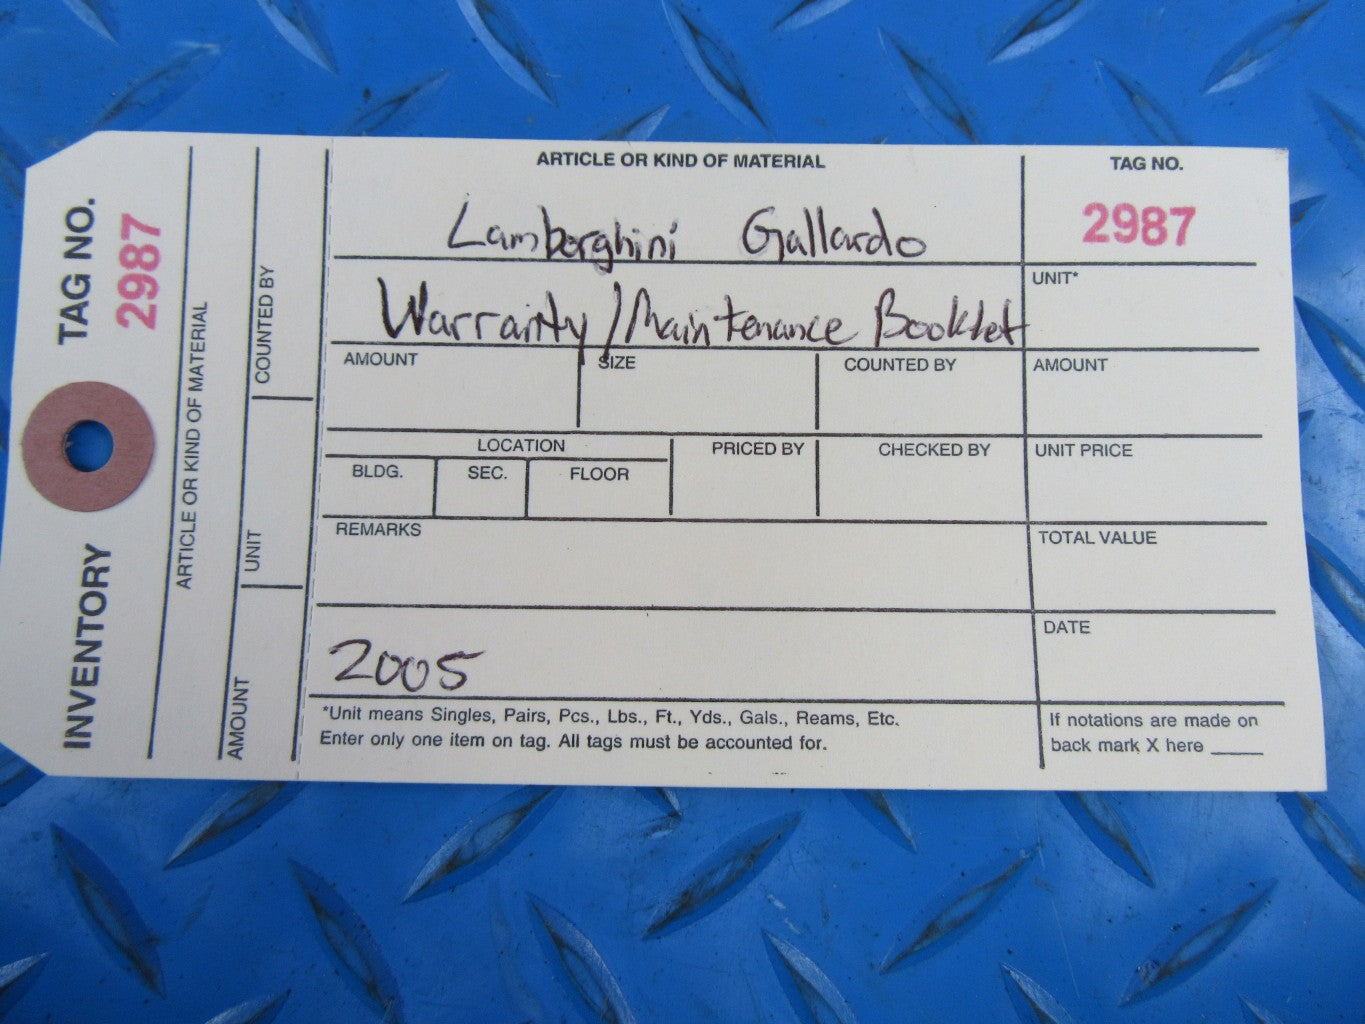 Lamborghini Gallardo warranty and scheduled maintenance plan booklet #2987